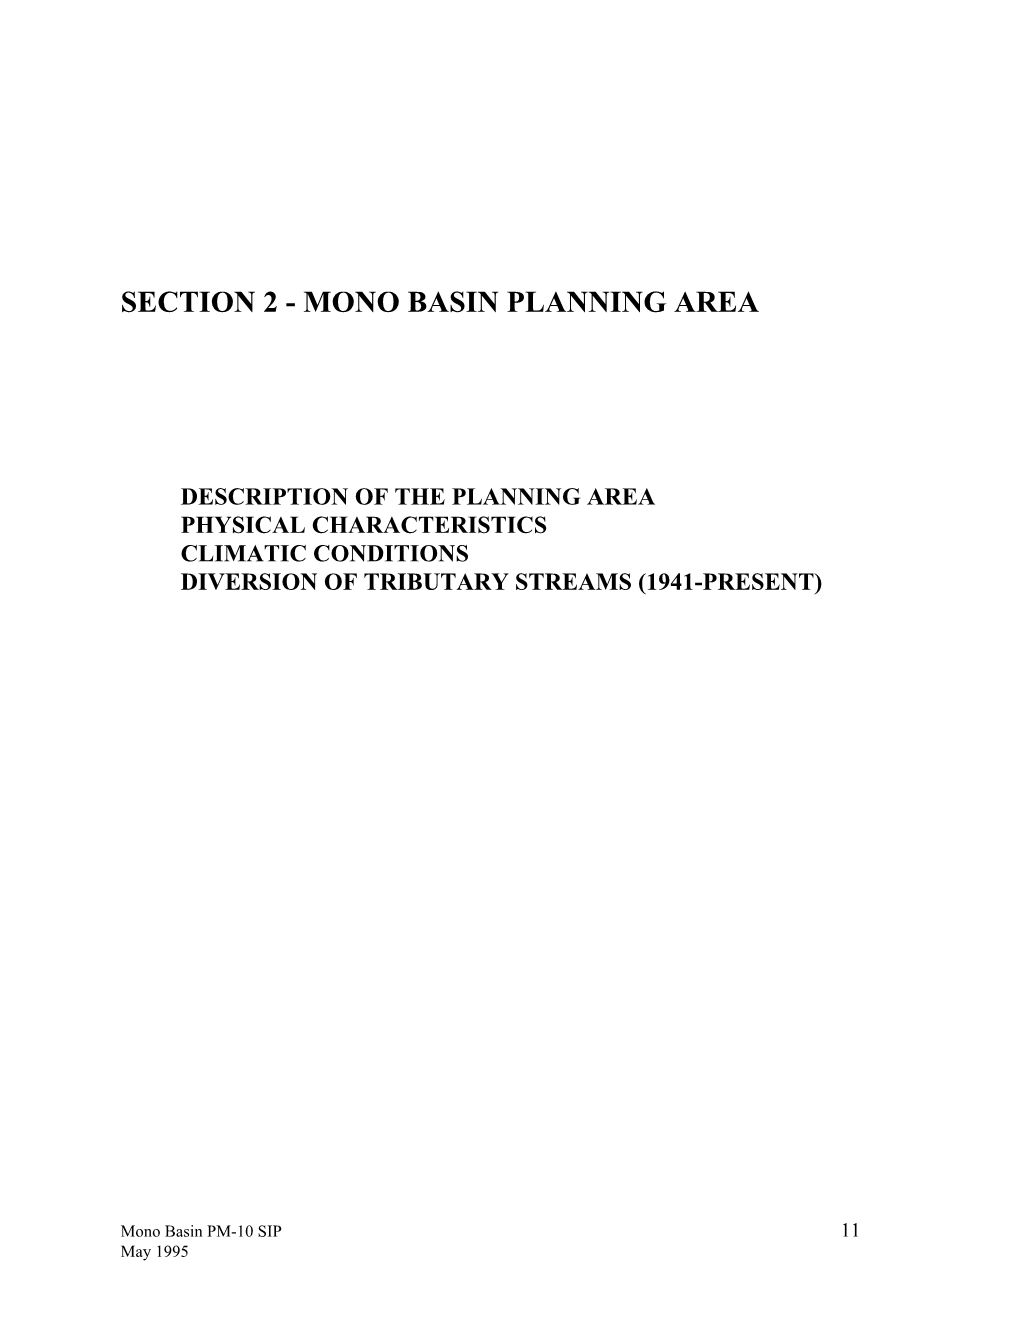 Section 2 - Mono Basin Planning Area